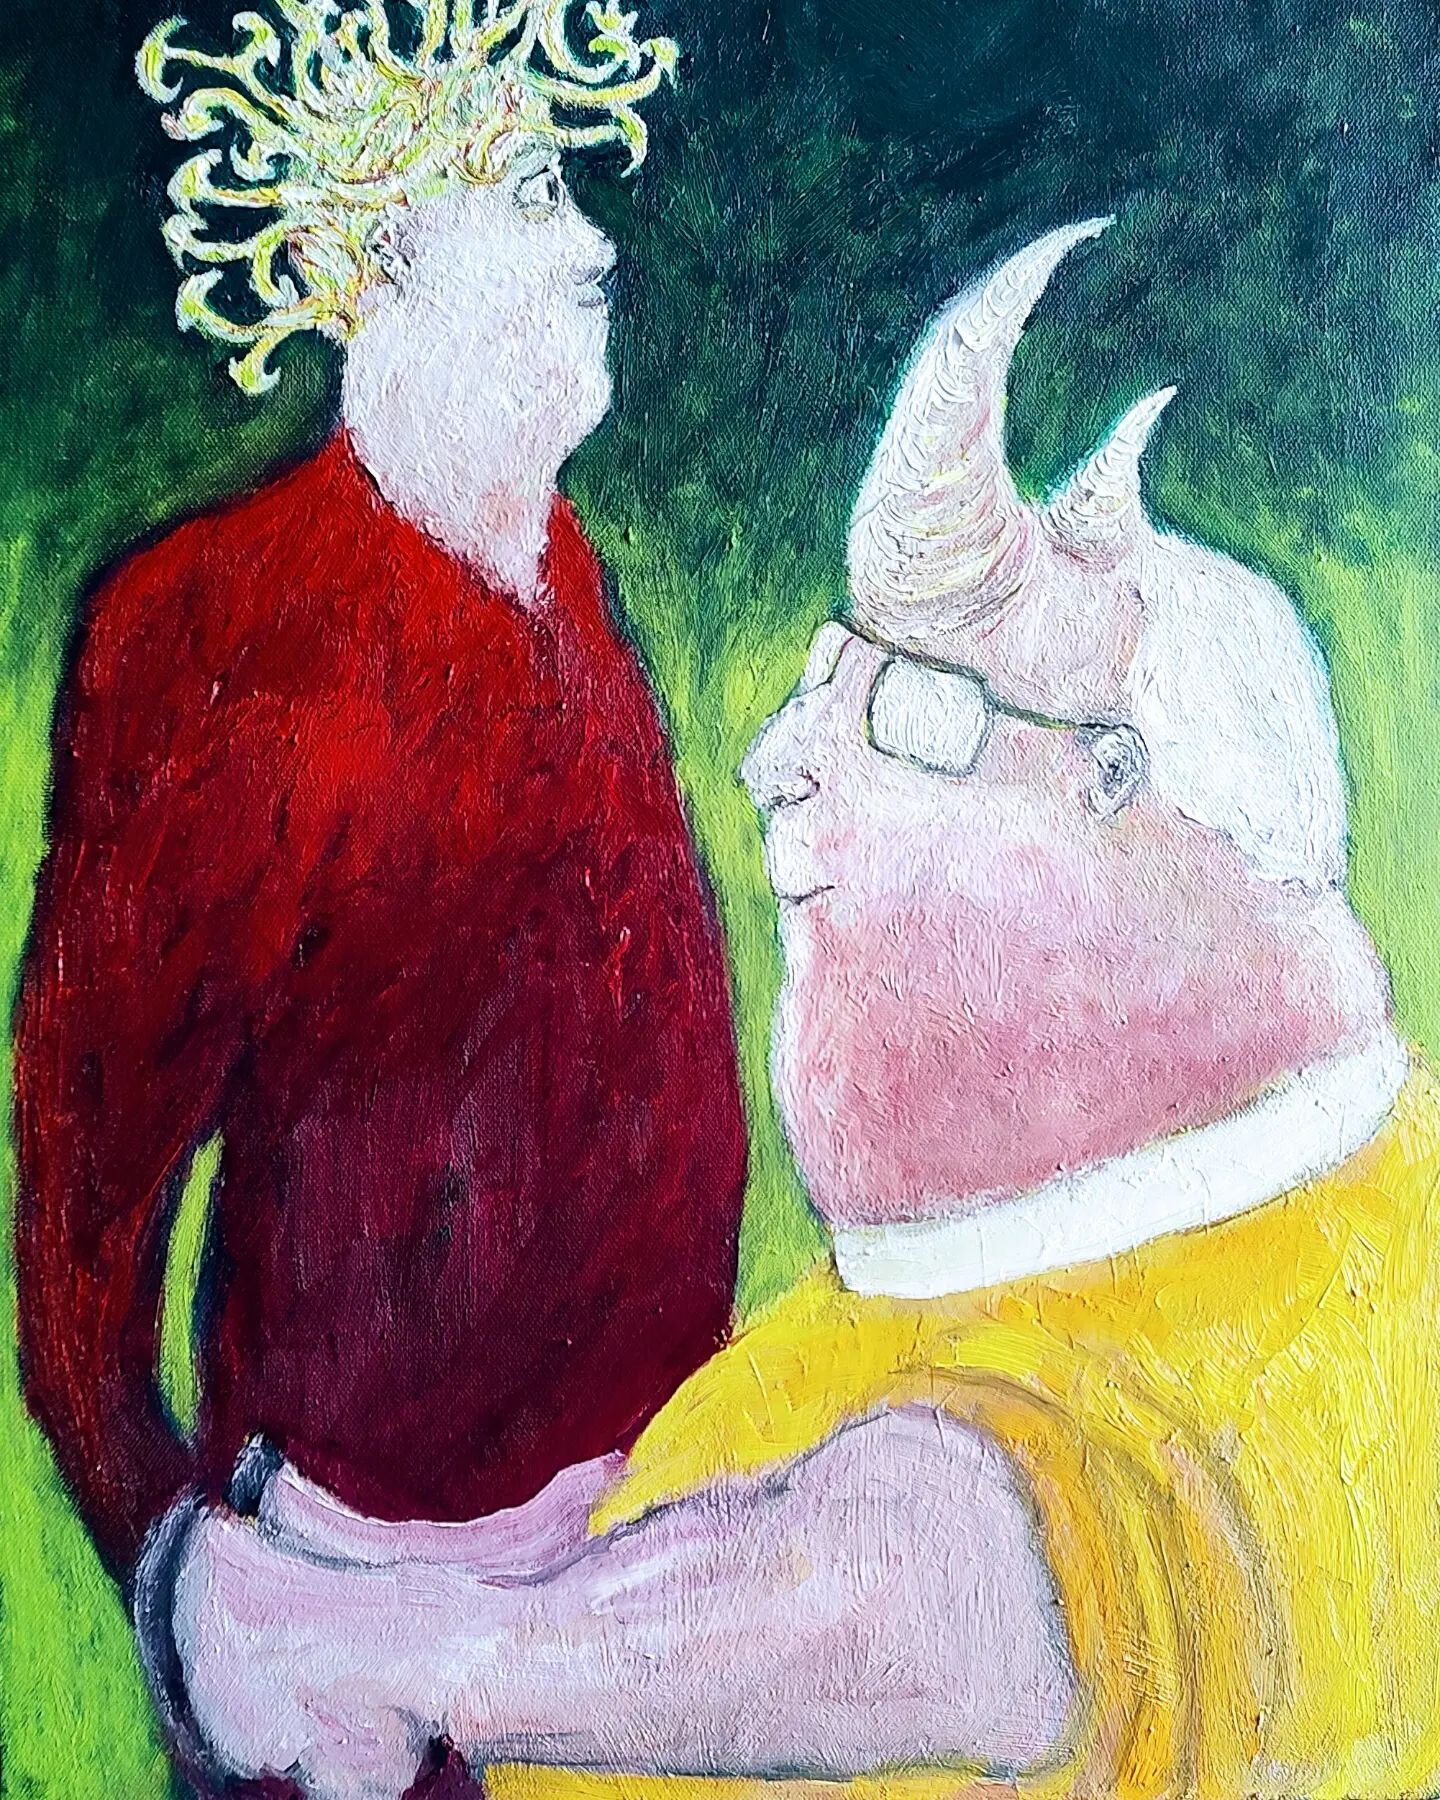 &quot;Bless You, My Child&quot; oil on canvas 18&quot; x 24&quot;
#oilpainting #painting #rhinoceros #mushroom #satire #humor #artgram #modernart #cartoon #artcollector #religion